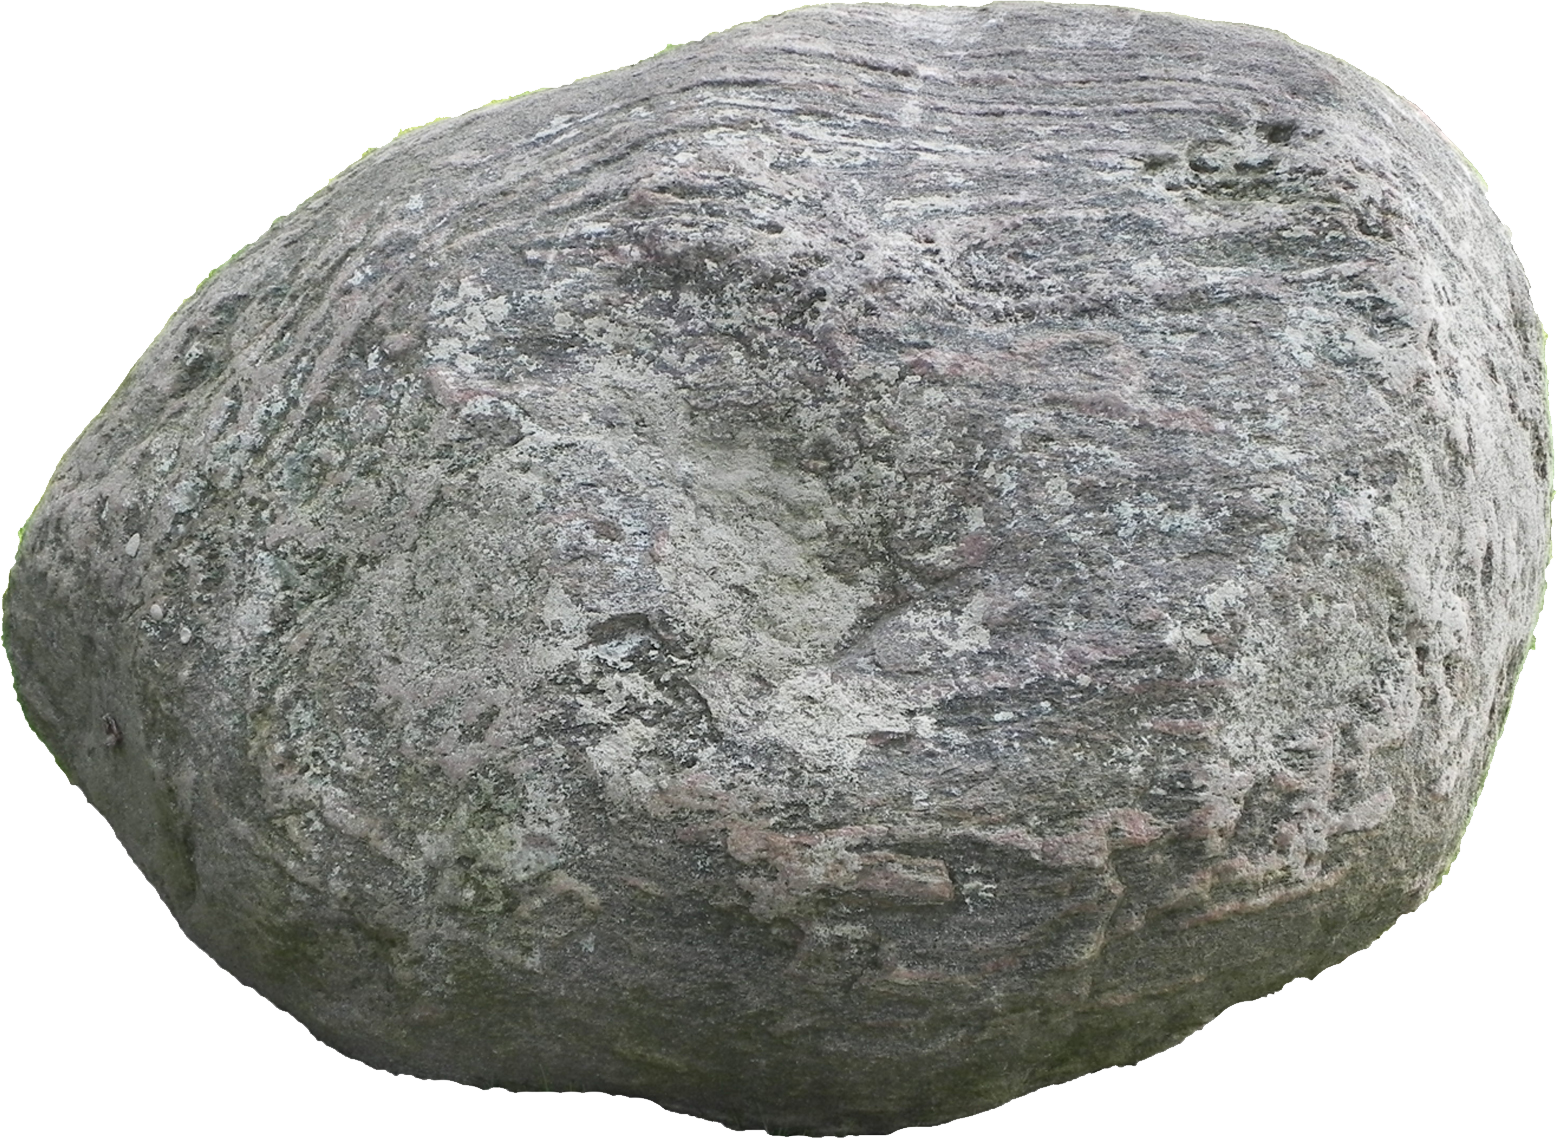 Clipart rock boulder. Stone png 